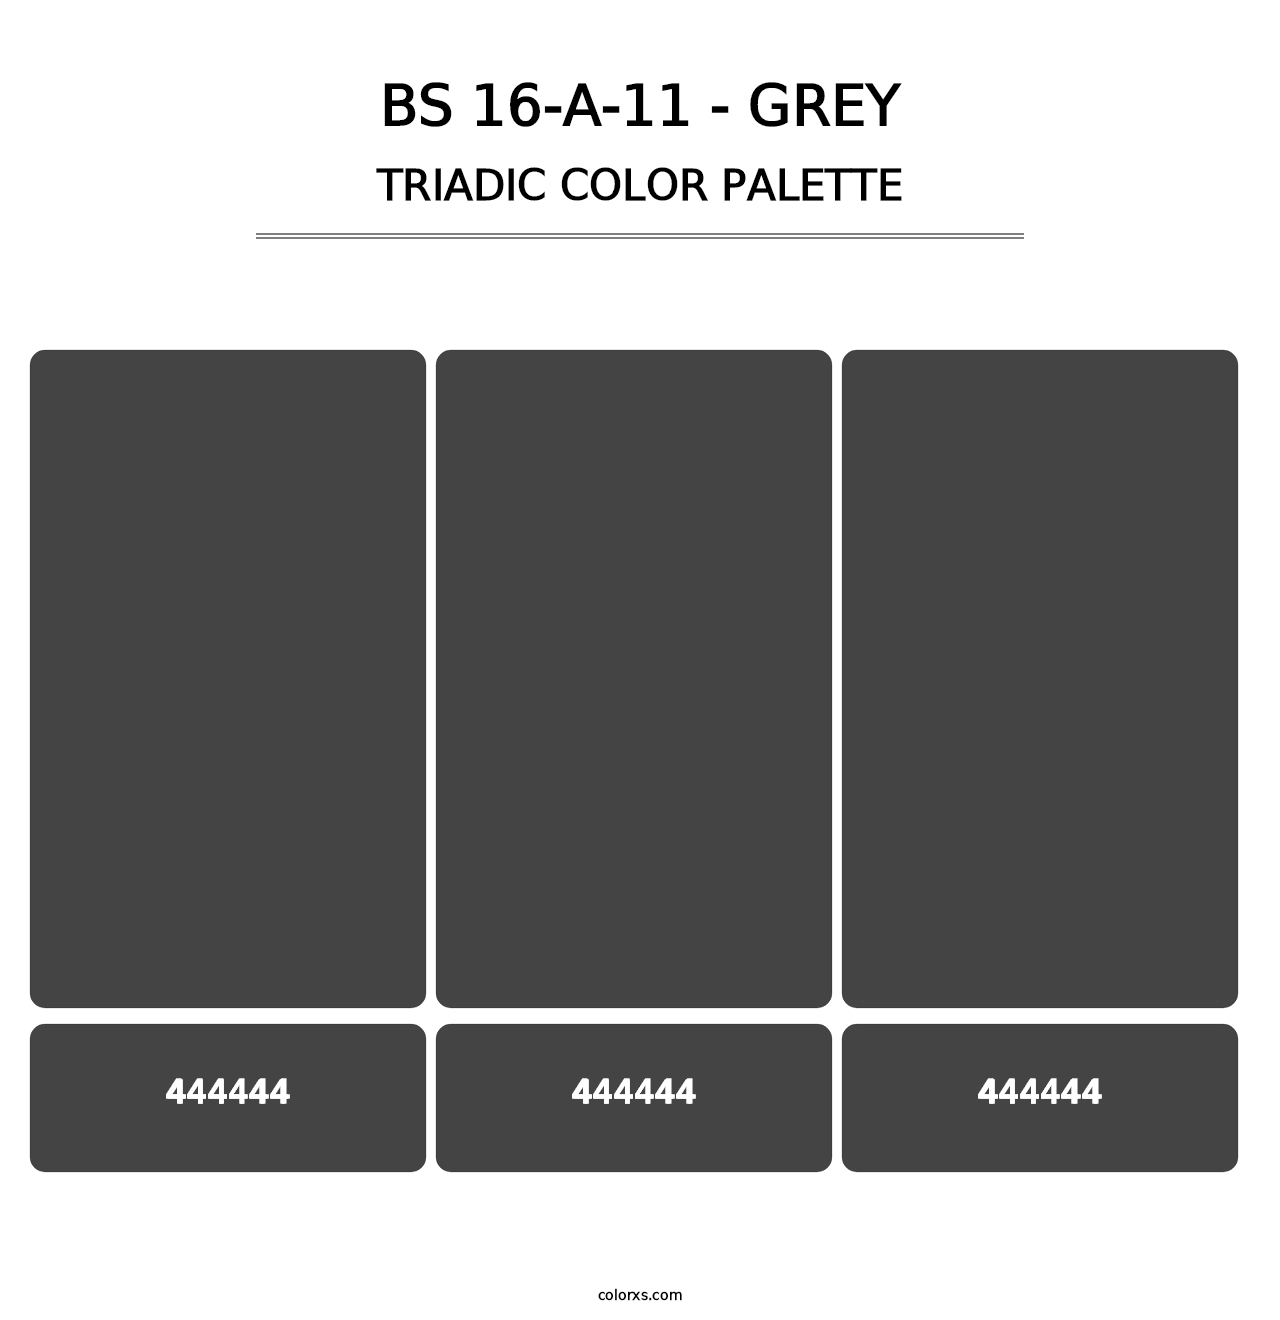 BS 16-A-11 - Grey - Triadic Color Palette